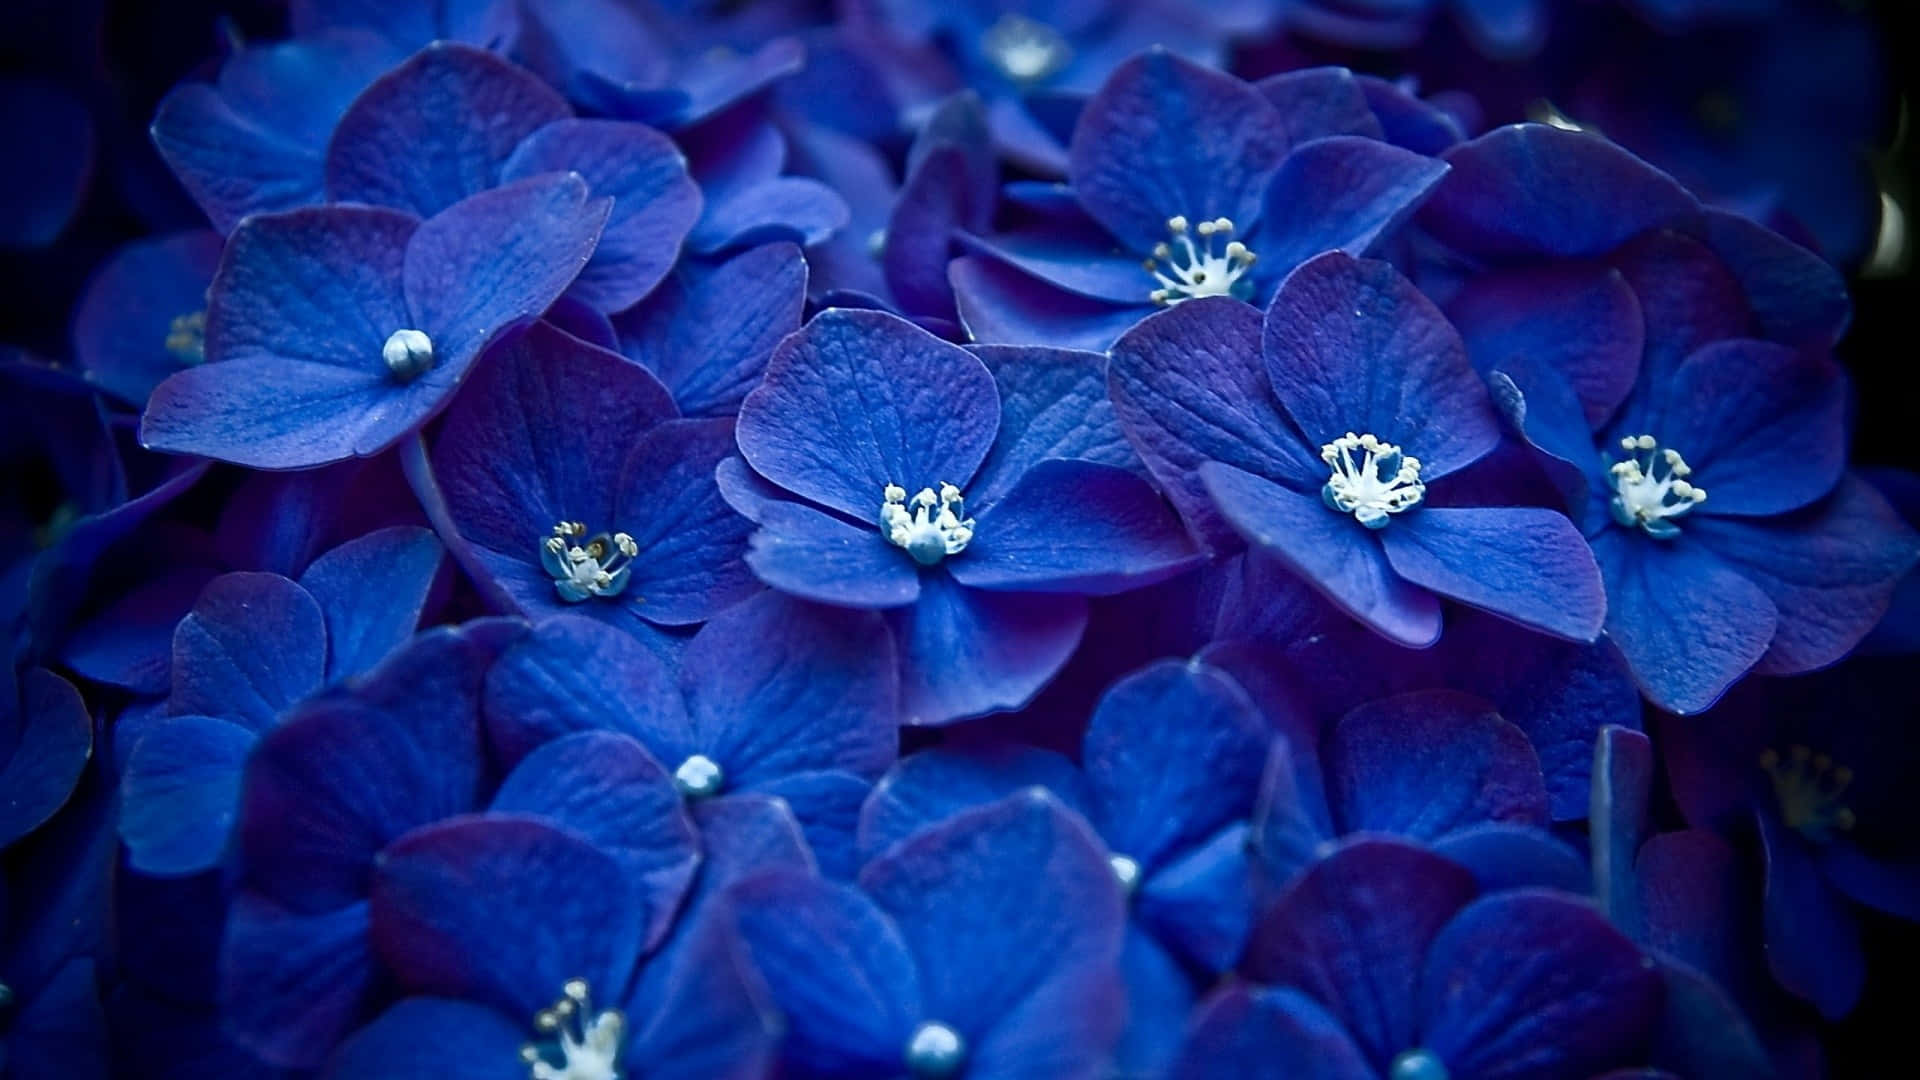 Hydrangeas Blue Flower Close-up Picture